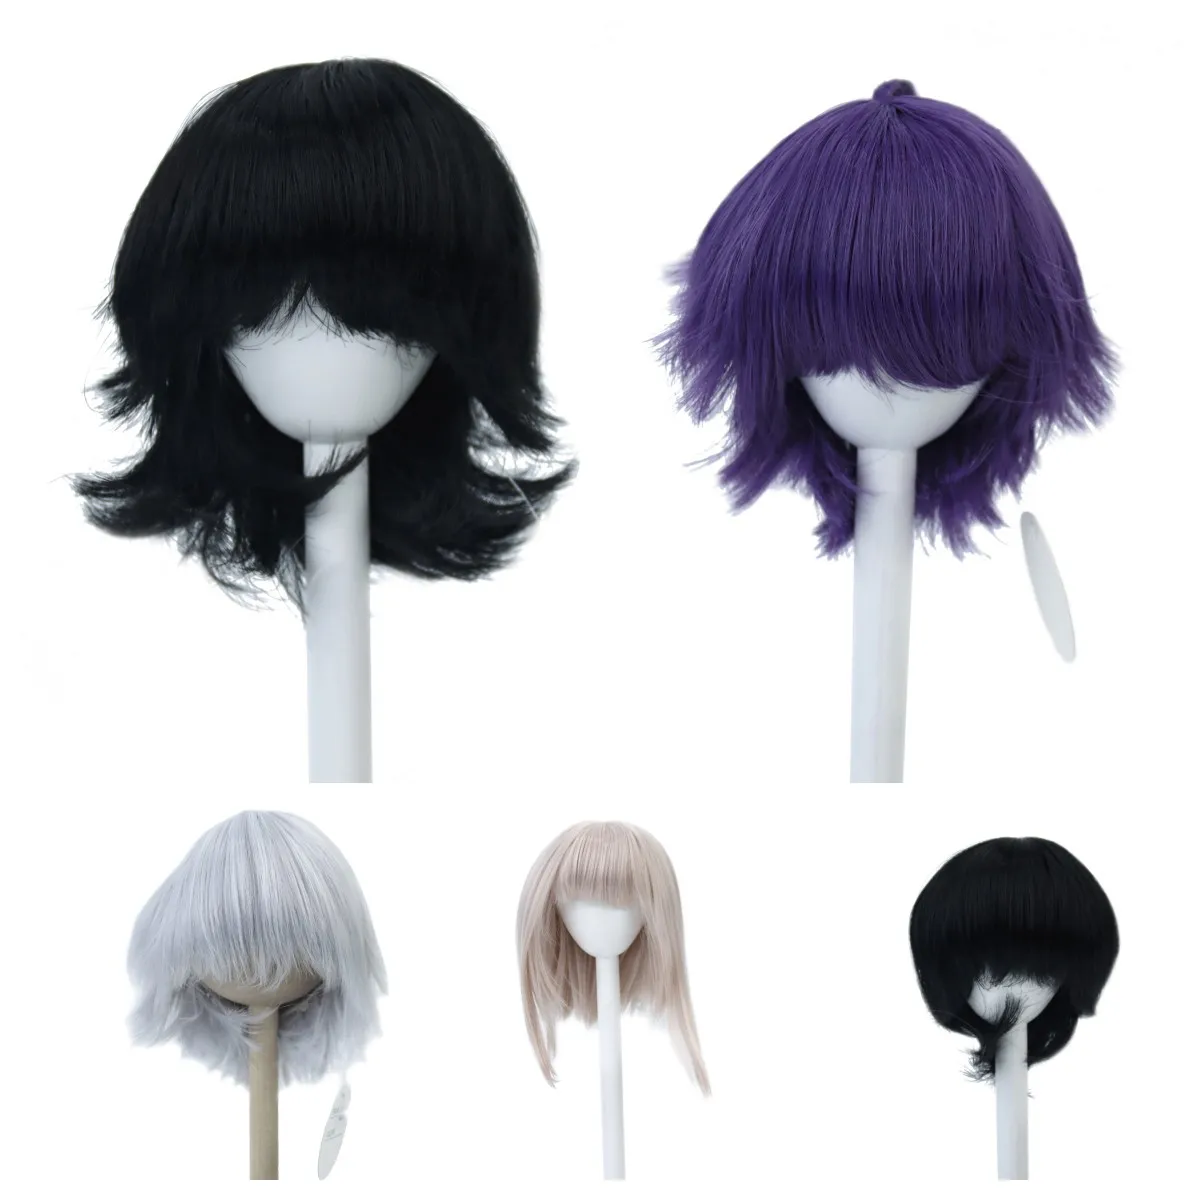 New 1/3 BJD Anime Doll Wigs Short Bobo With Bangs Purple White Black High Temperature Fiber For Dollfie Dream SD MSD Doll Hair yesoryes виброяйцо purple dream